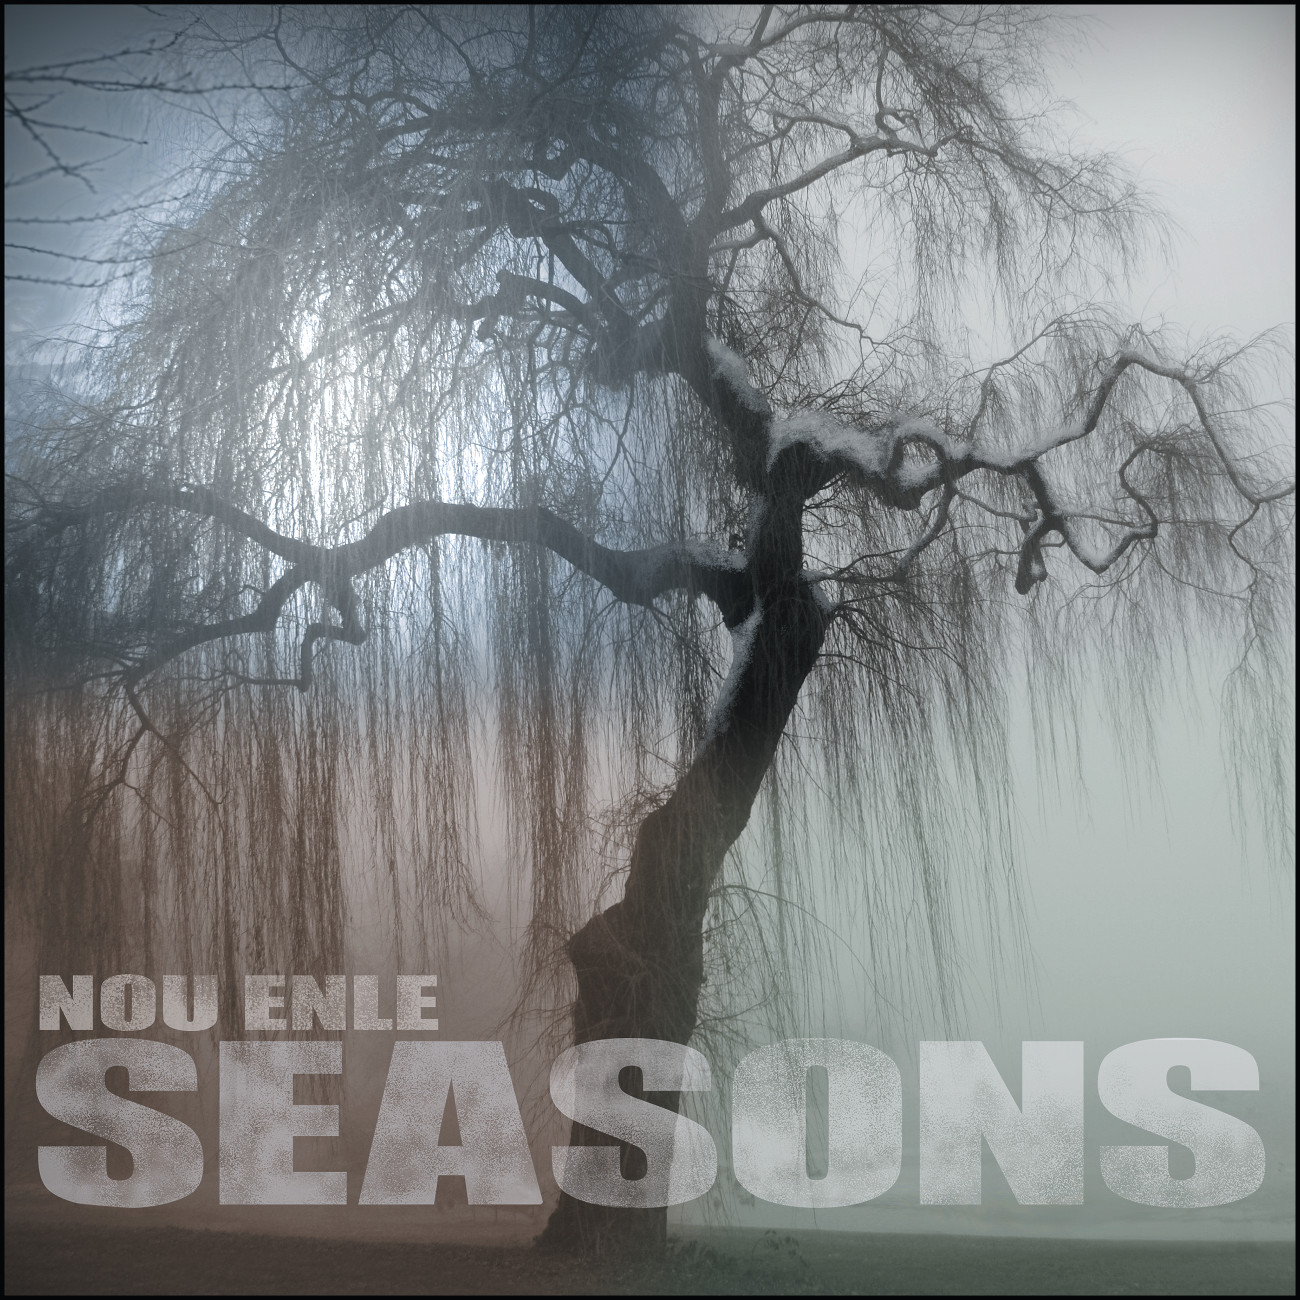 Seasons Album release next month!